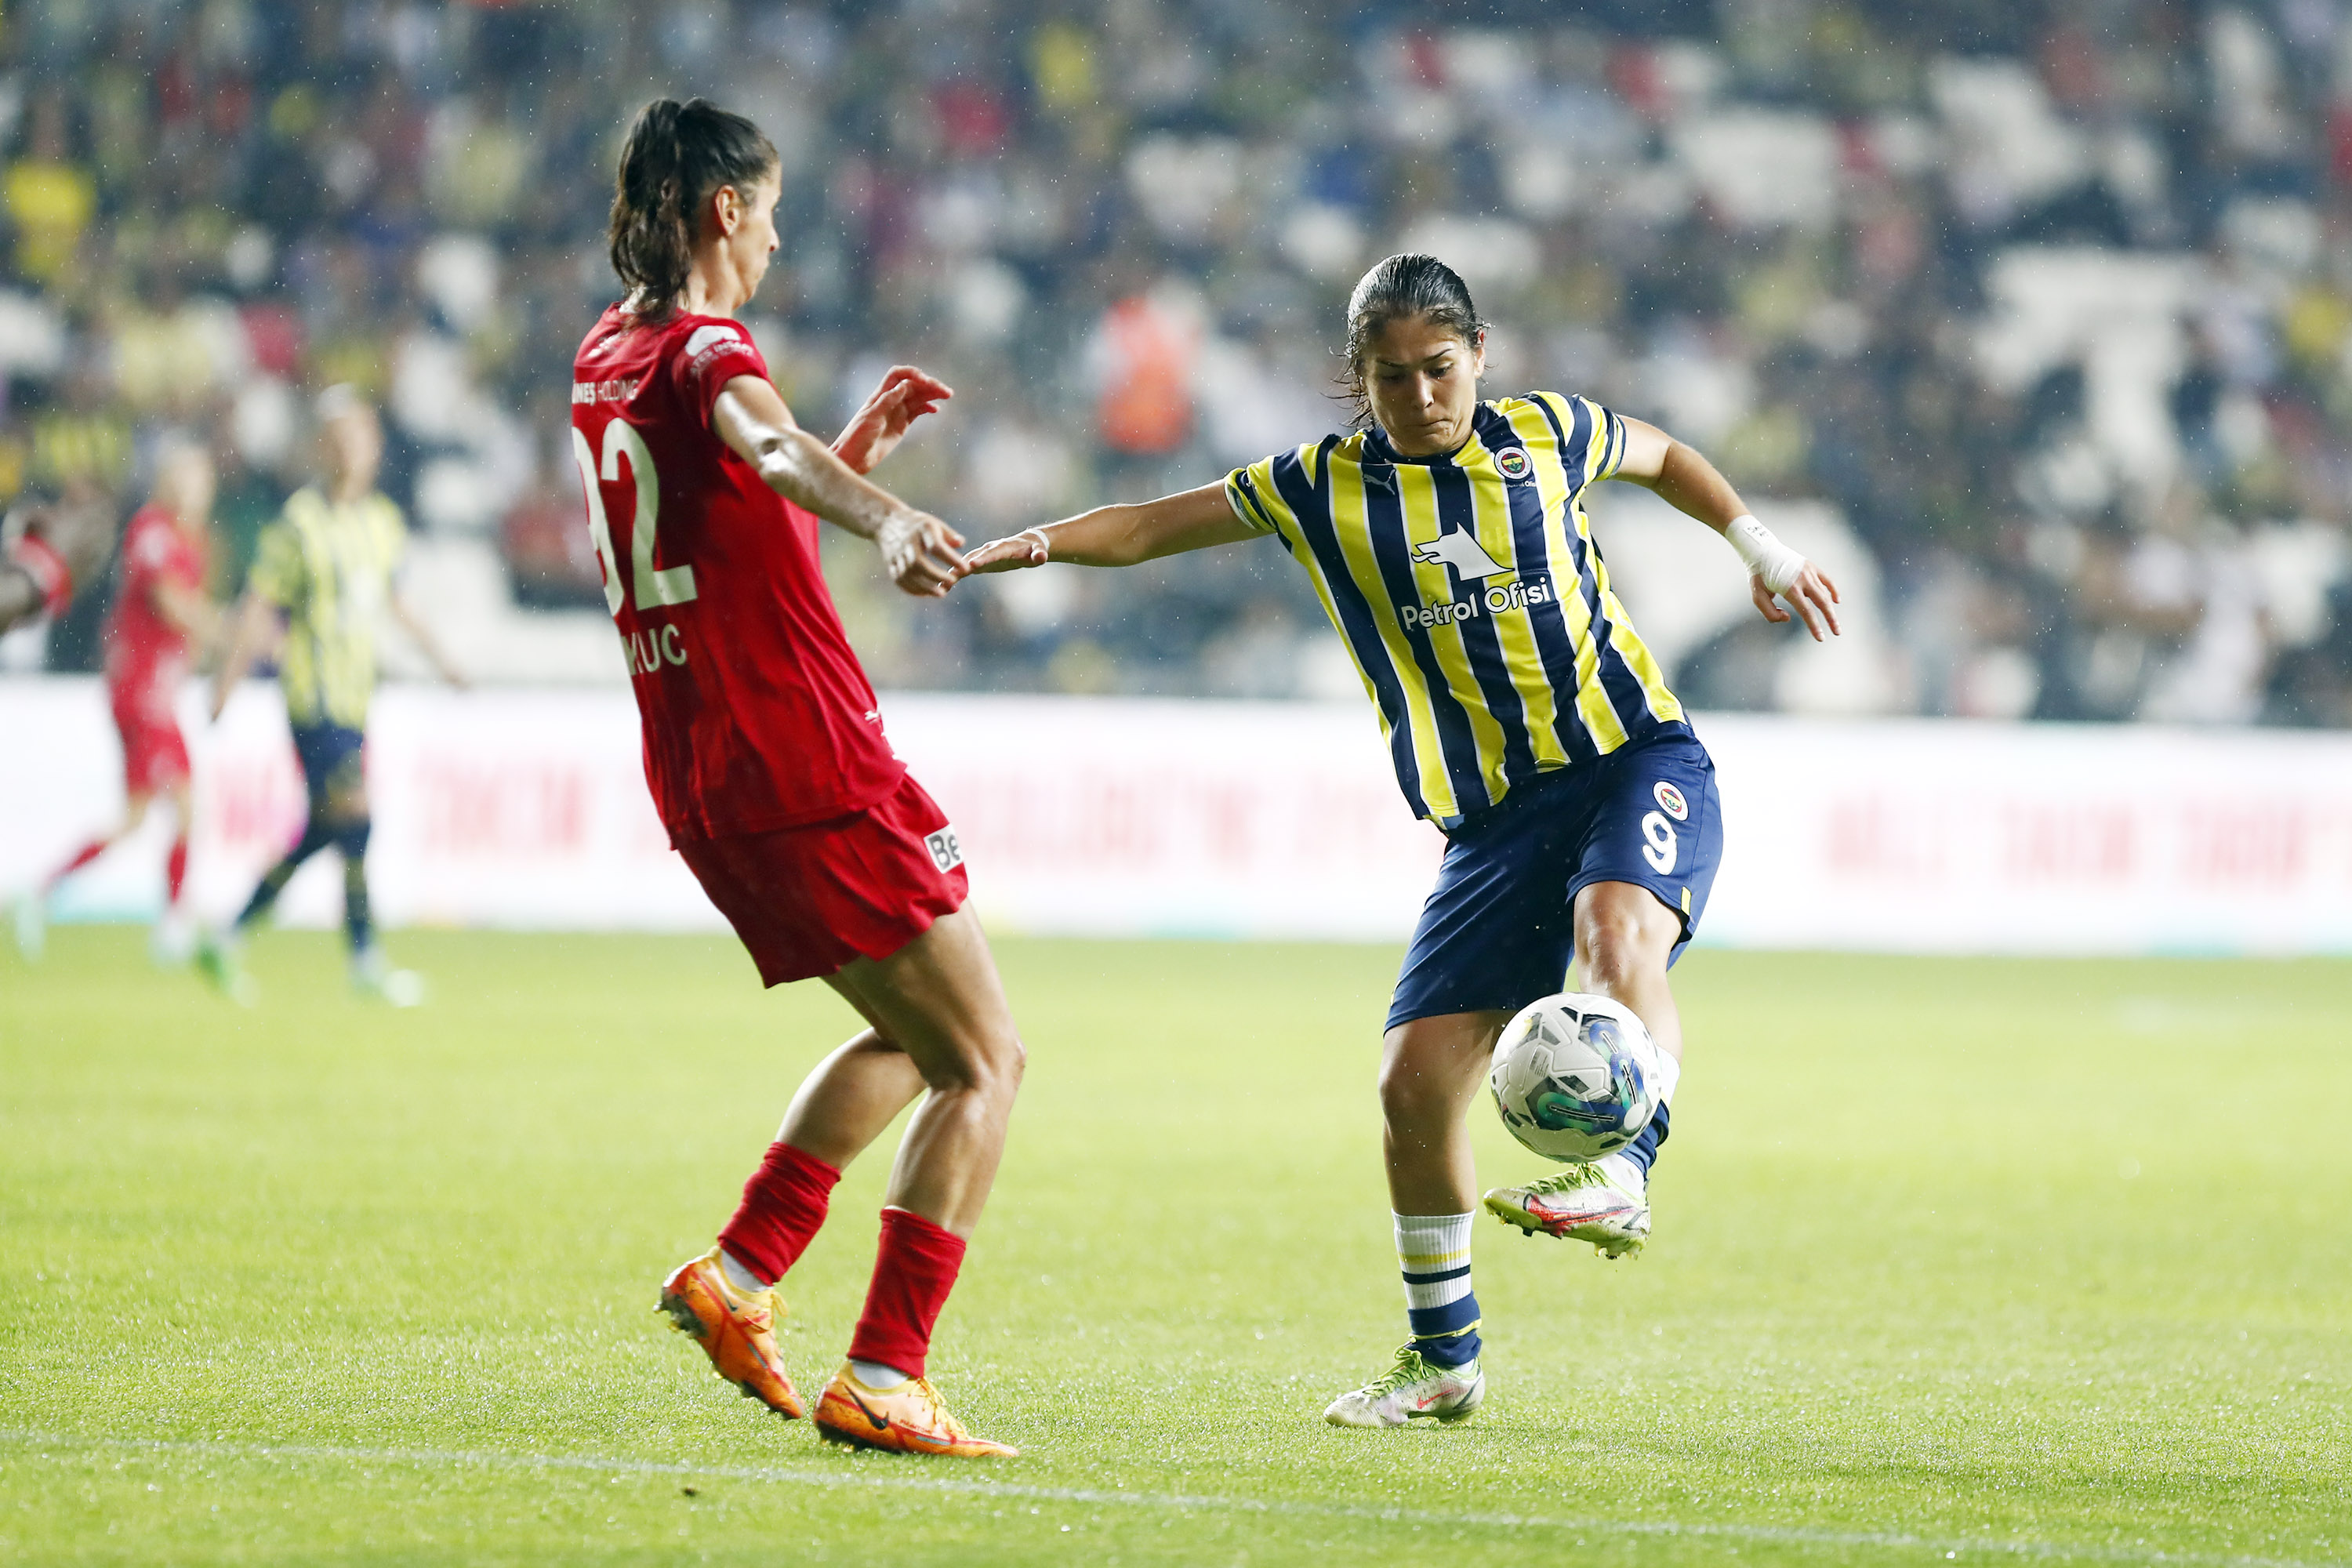 Ankara BŞB. Fomget G.S.K 4-2 Fenerbahçe Petrol Ofisi (Turkcell Kadın Futbol Süper Ligi finali)